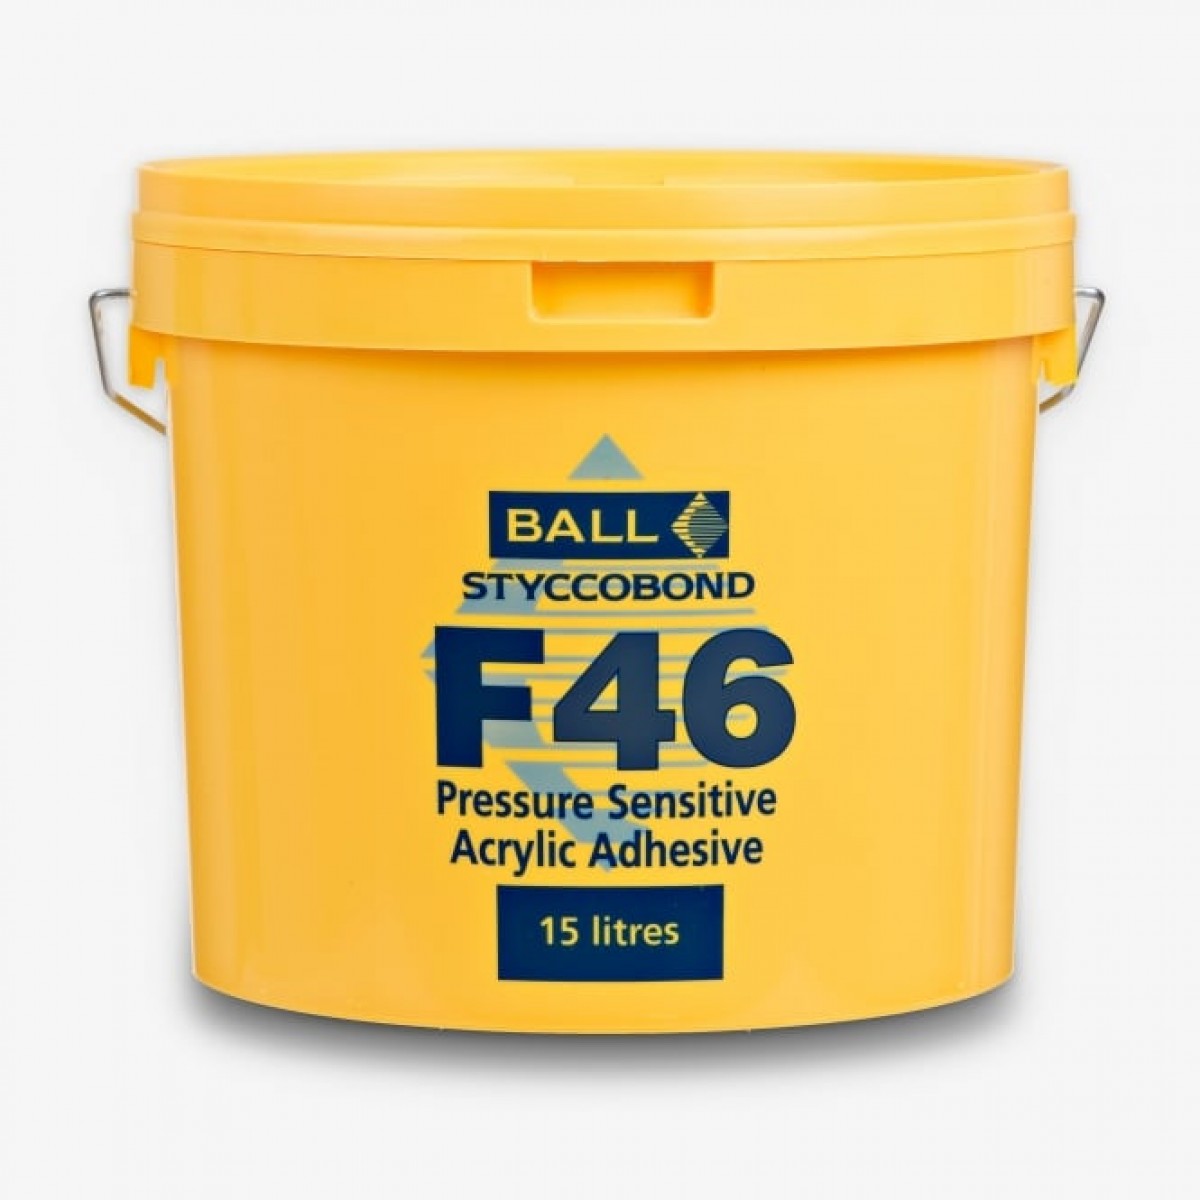 F46 LVT 15ltr Adhesive